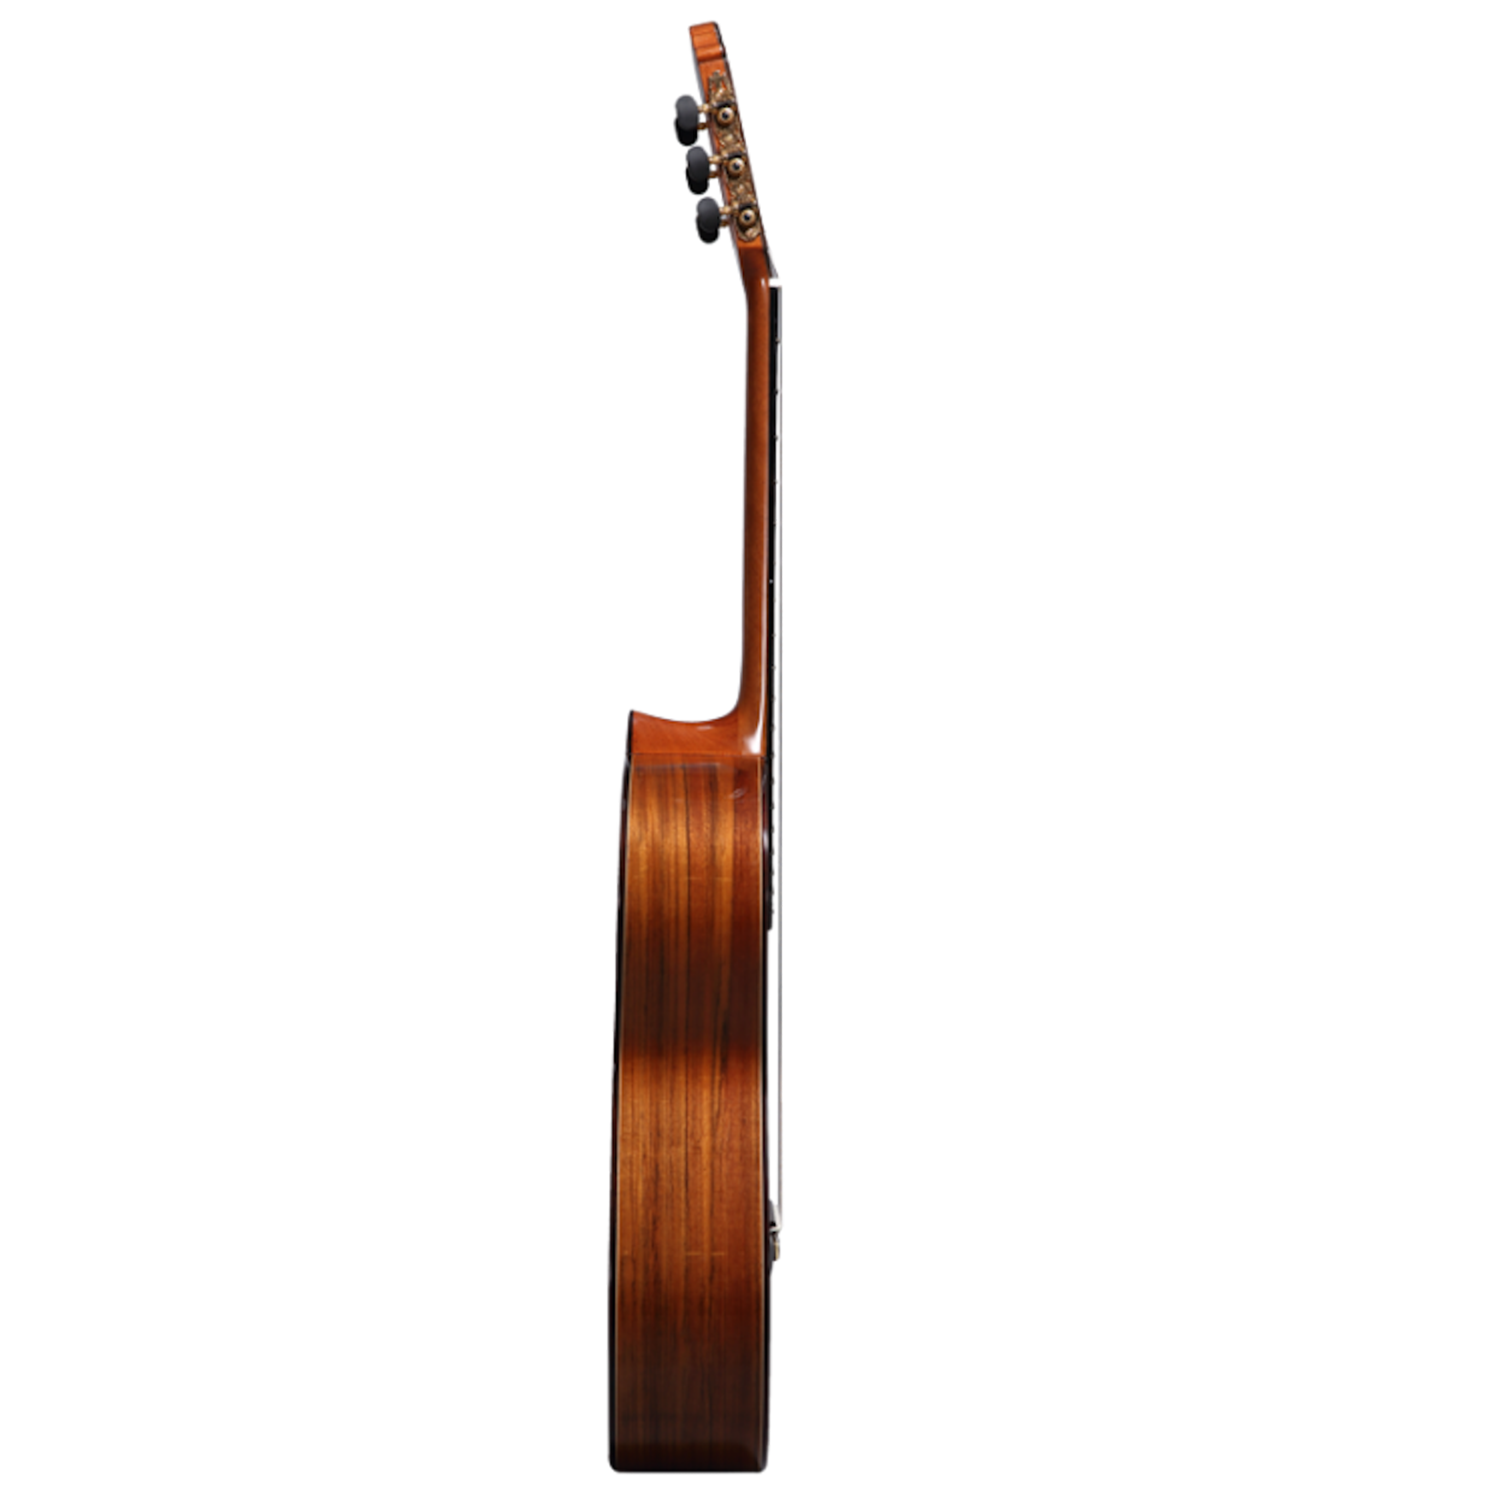 Altamira N500 Classical Guitar Solid Cedar Top/Solid Ovangkol Back & Sides w/Soft Case